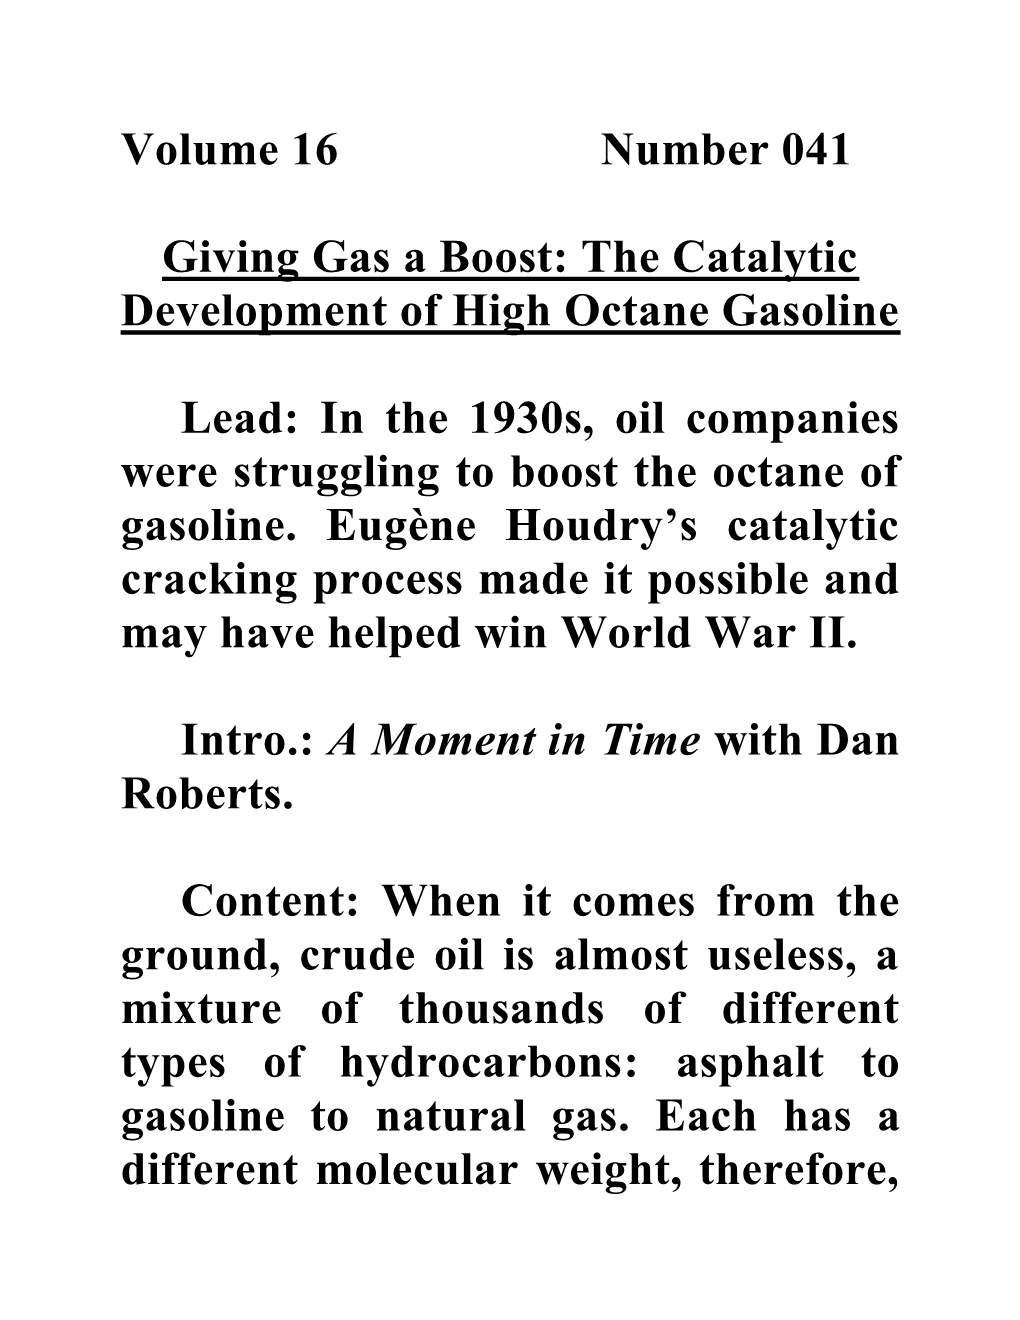 The Catalytic Development of High Octane Gasoline Lead